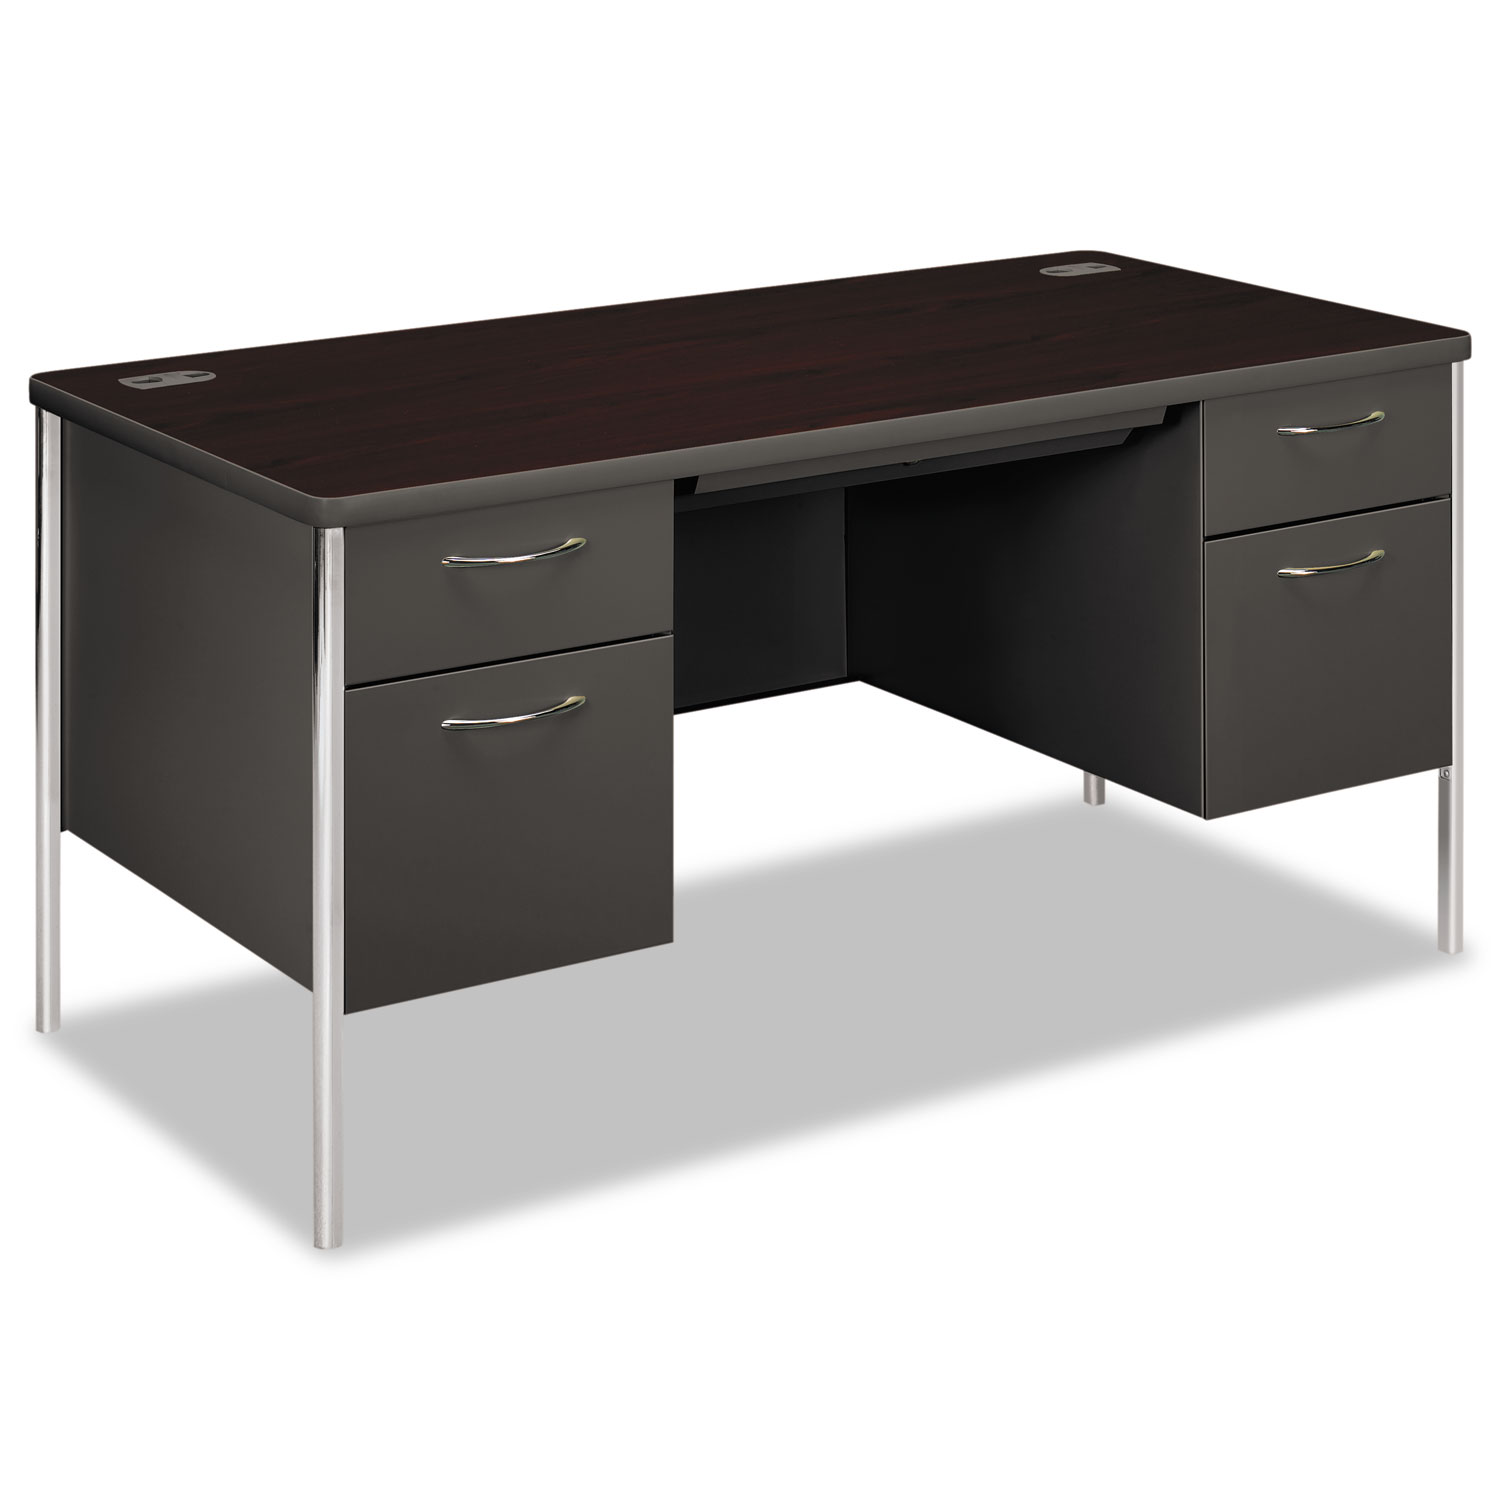  HON H88962.N.S Mentor Series Double Pedestal Desk, 60w x 30d x 29-1/2h, Mahogany/Charcoal (HON88962NS) 